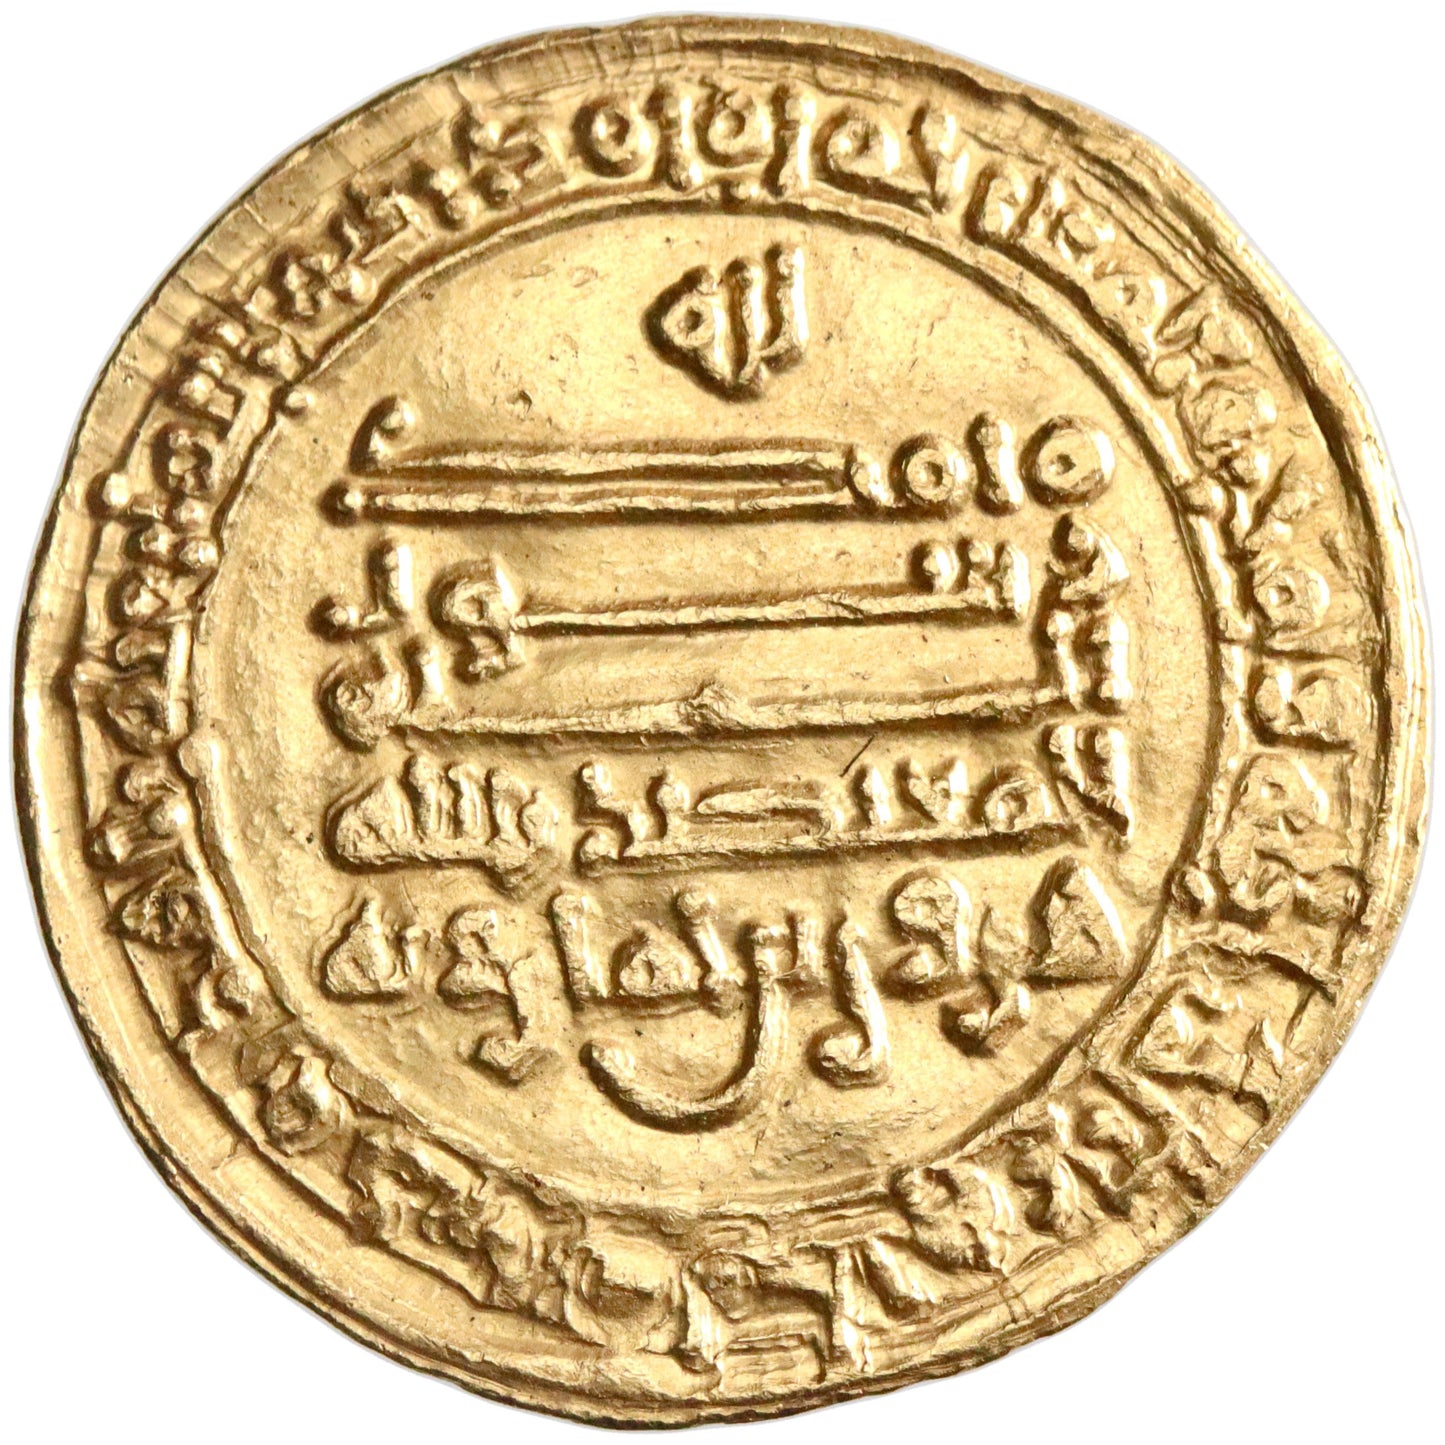 Tulunid, Harun ibn Khumarawayh, gold dinar, Dimashq (Damascus) mint, AH 287, citing Abbasid caliph al-Mu'tadid